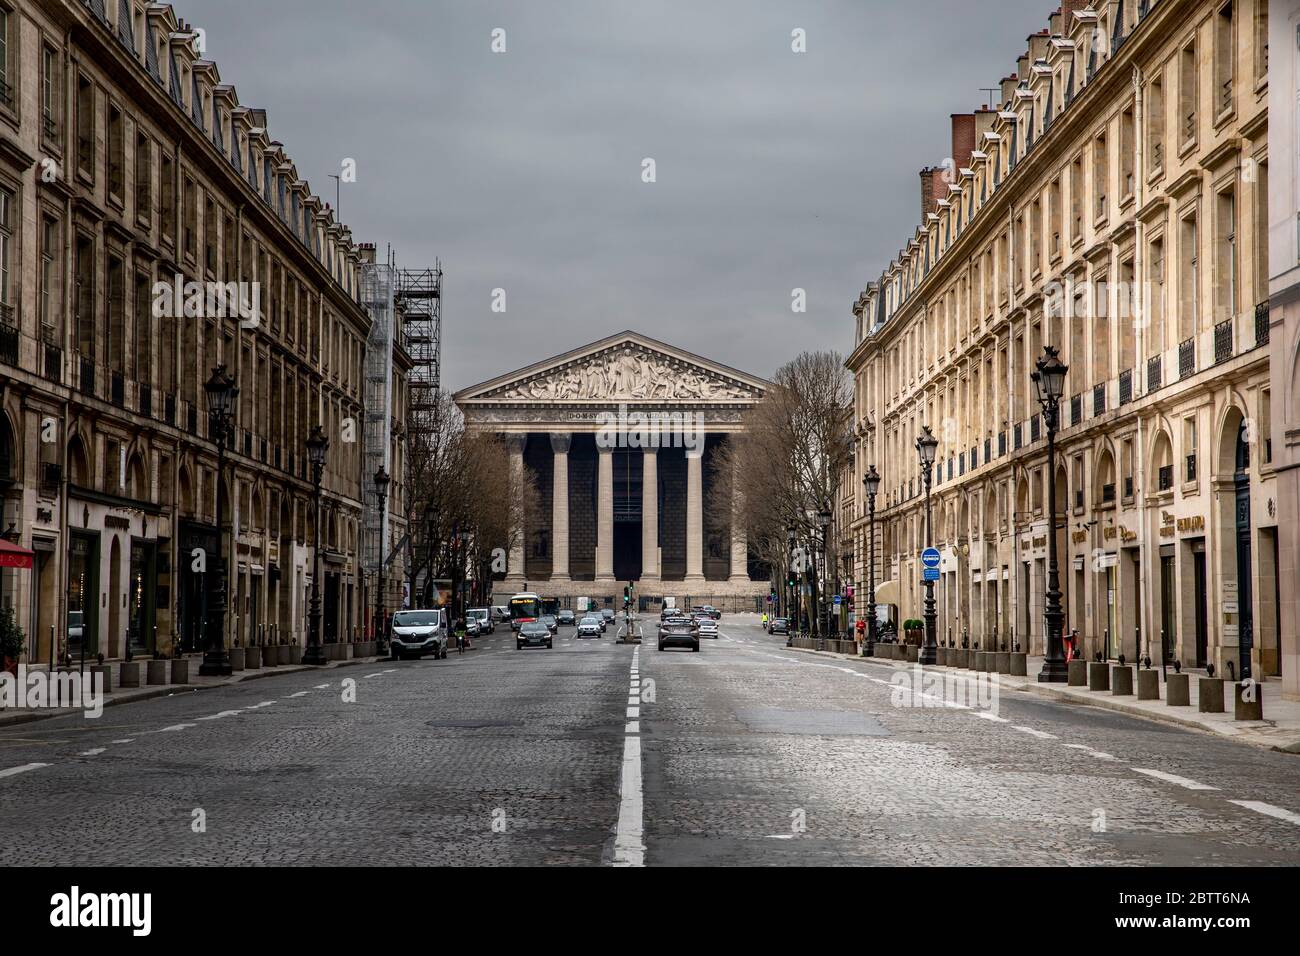 Paris, Frankreich - 17. März 2020: 1. Tag der Eindämmung wegen der Covid-19-Pandemie auf dem Place de la Concorde, nahe der Champs Elysees in Paris Stockfoto